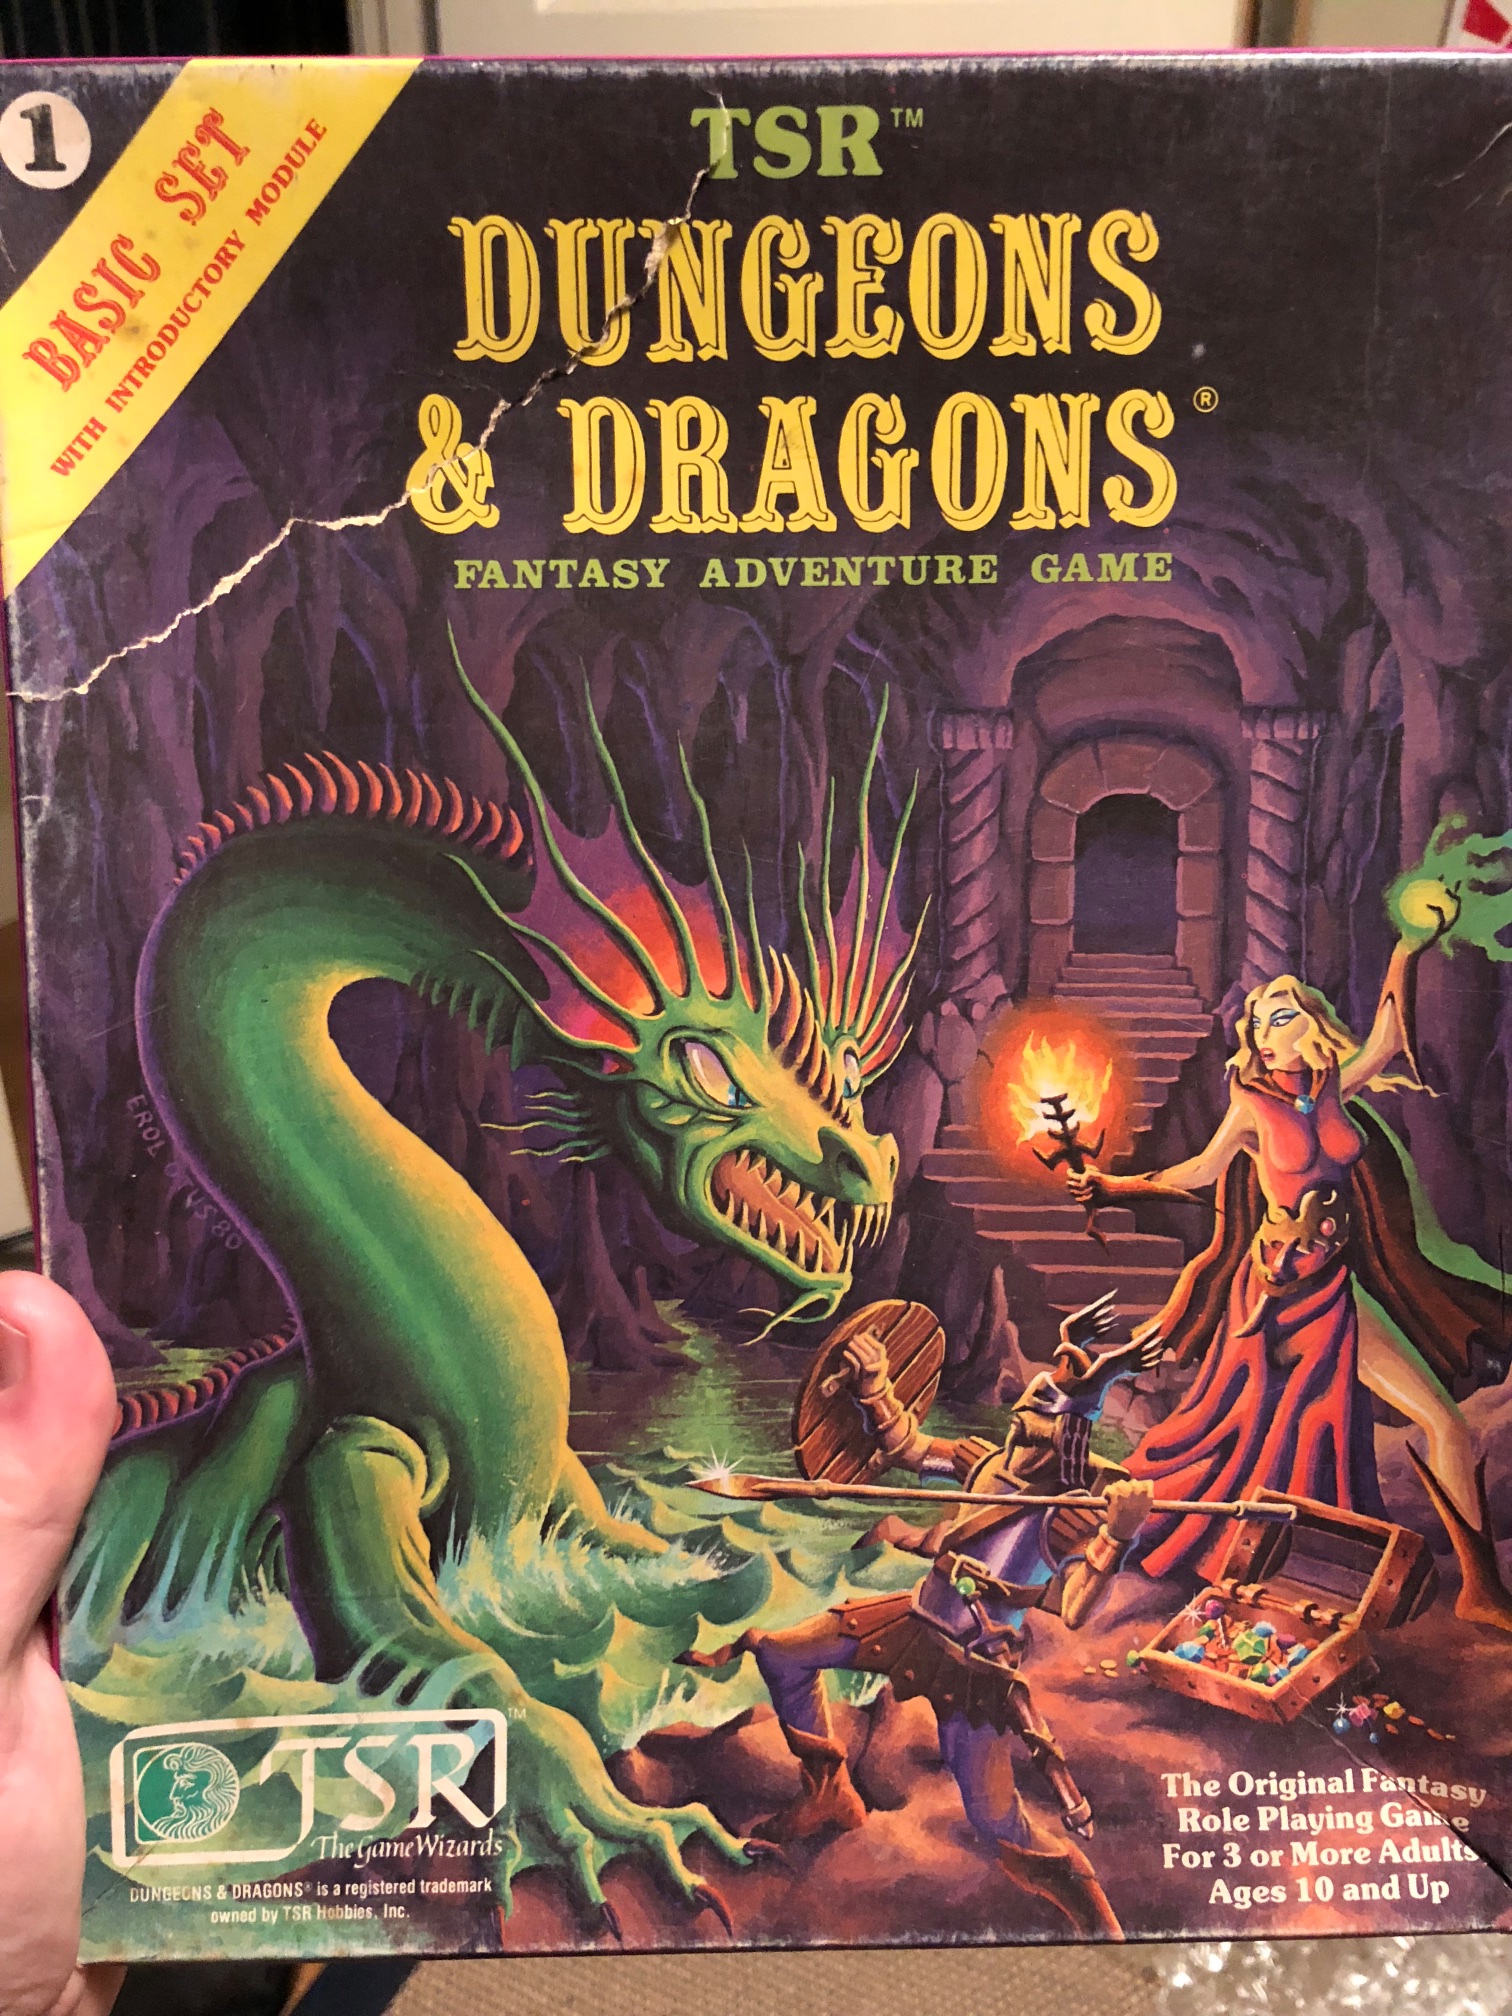 Dungeons & Dragons BASIC Source Code